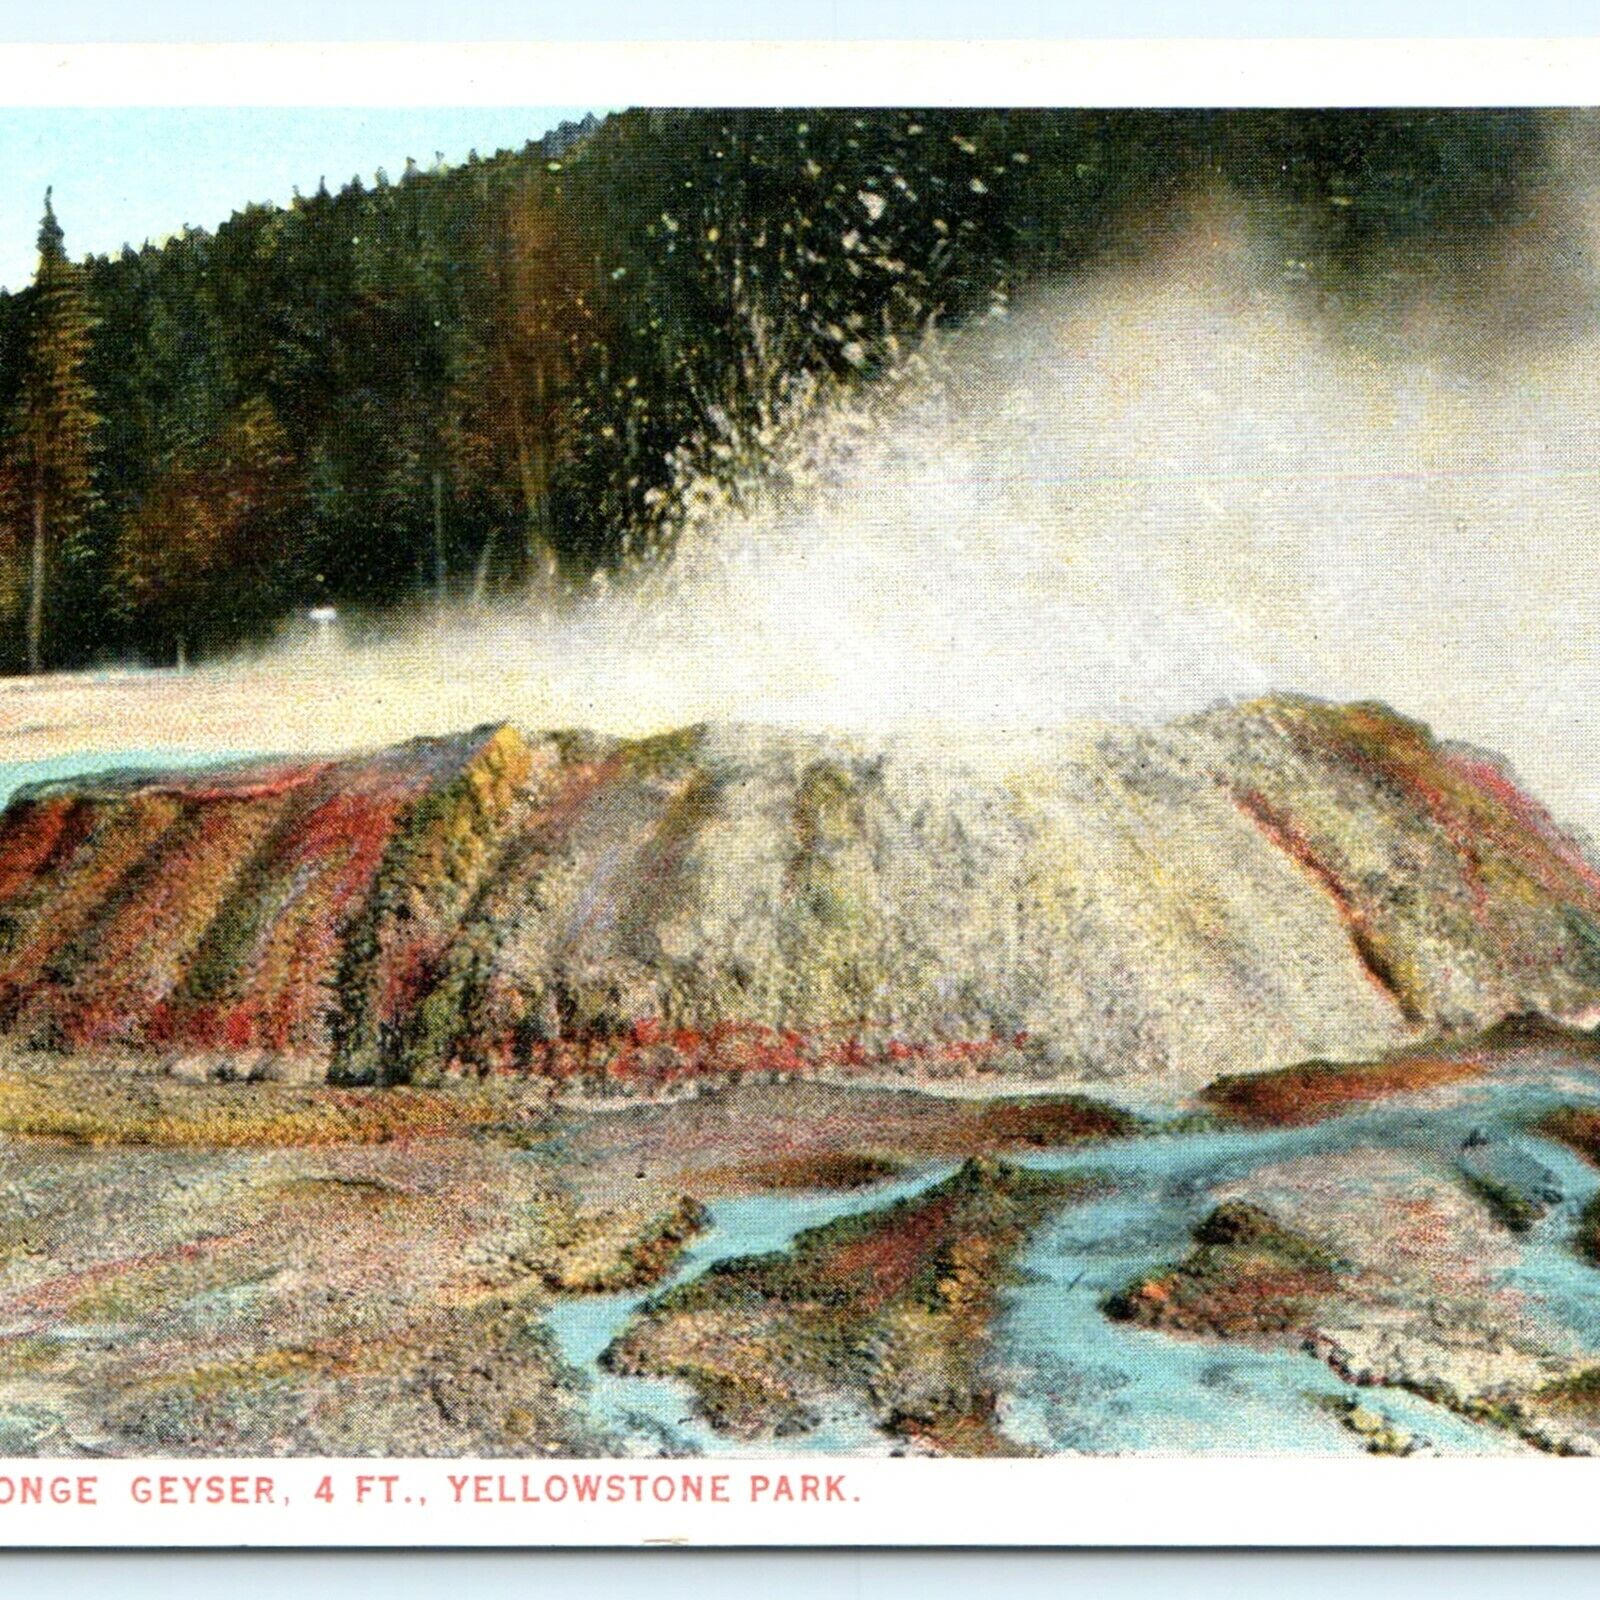 1920s Yellowstone Iris Falls Sponge Geyser Photo Postcard Litho Park WY A32